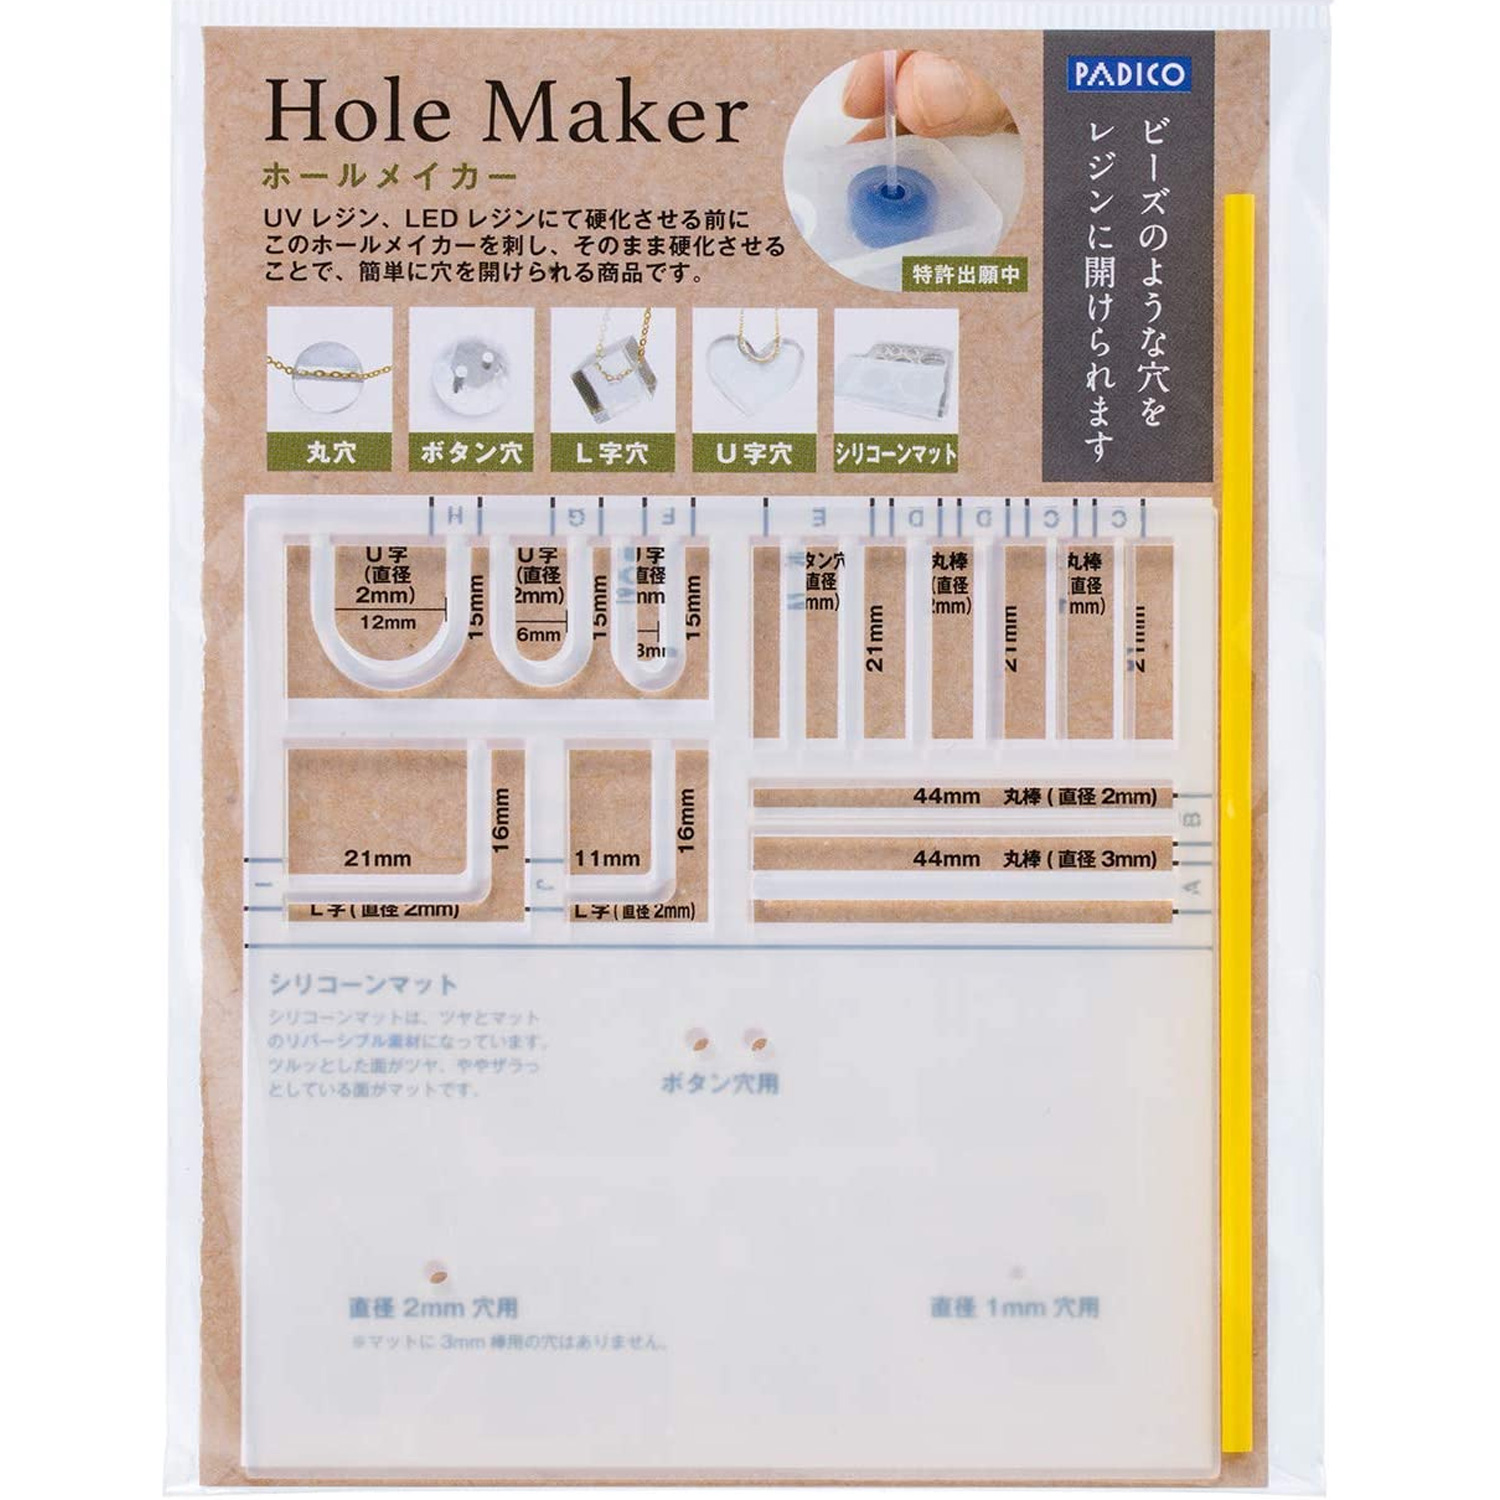 Hole Maker